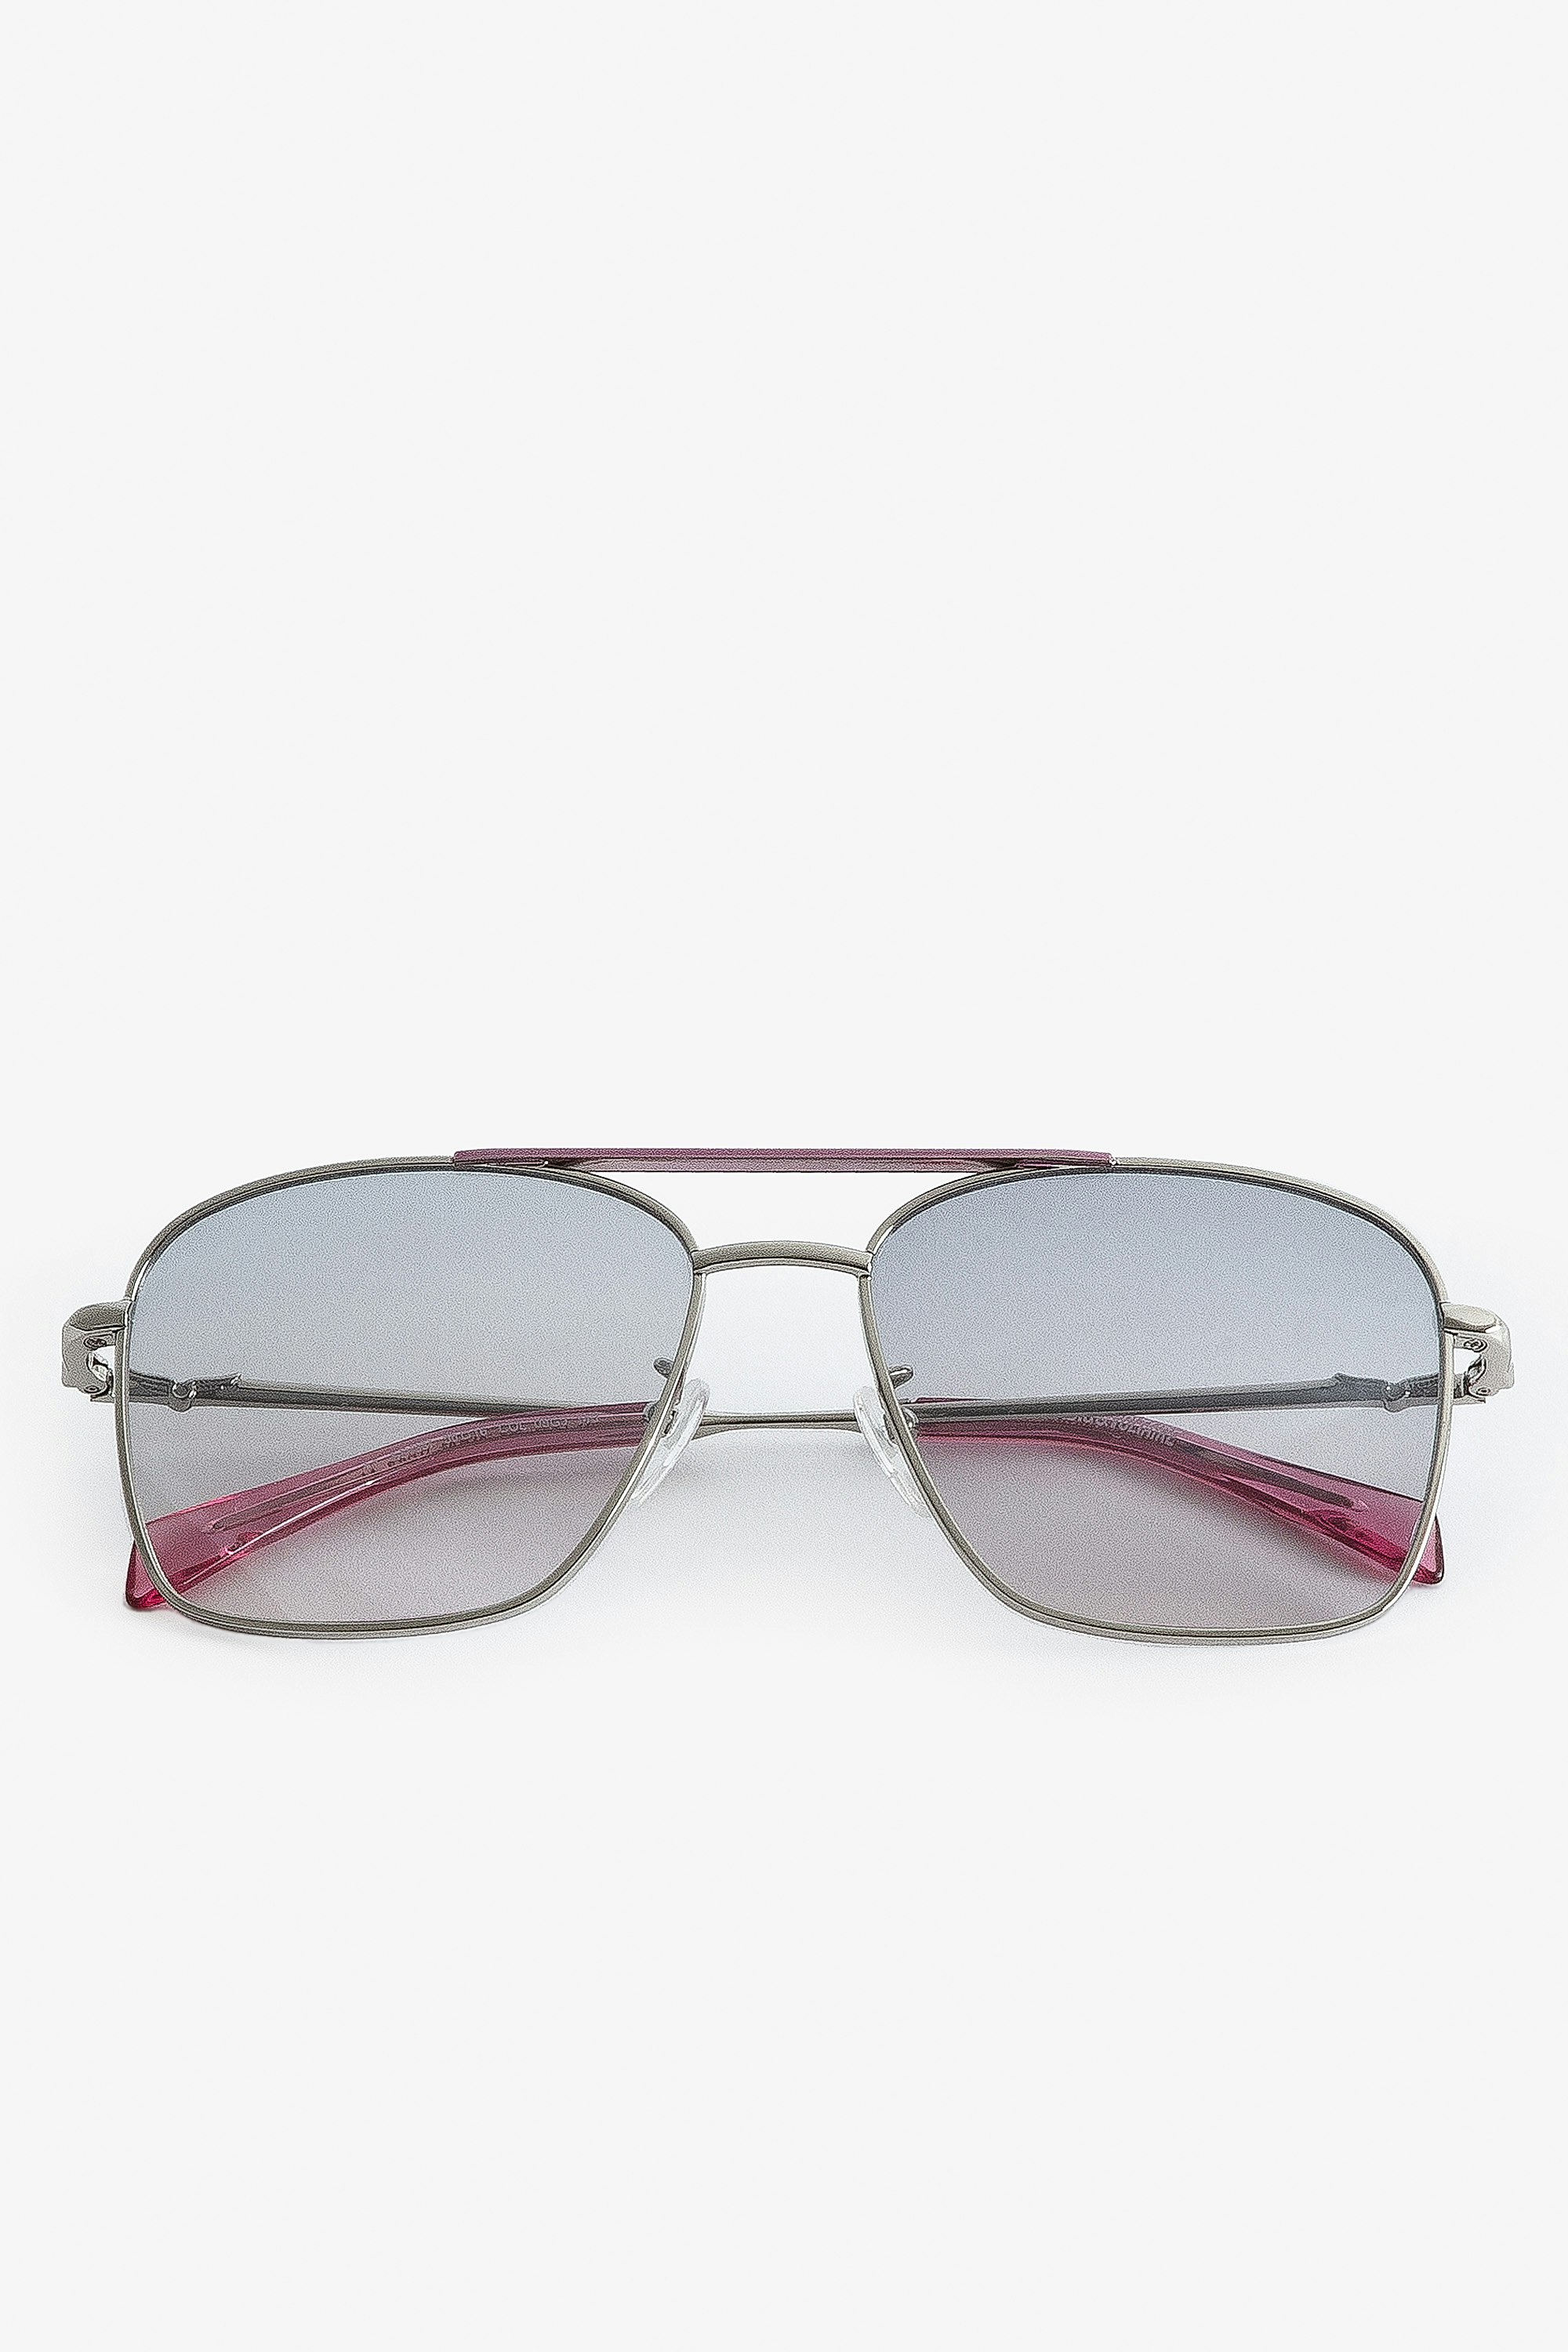 Aviator Wings Sunglasses Unisex aviator sunglasses in pink metal with smoke glass.